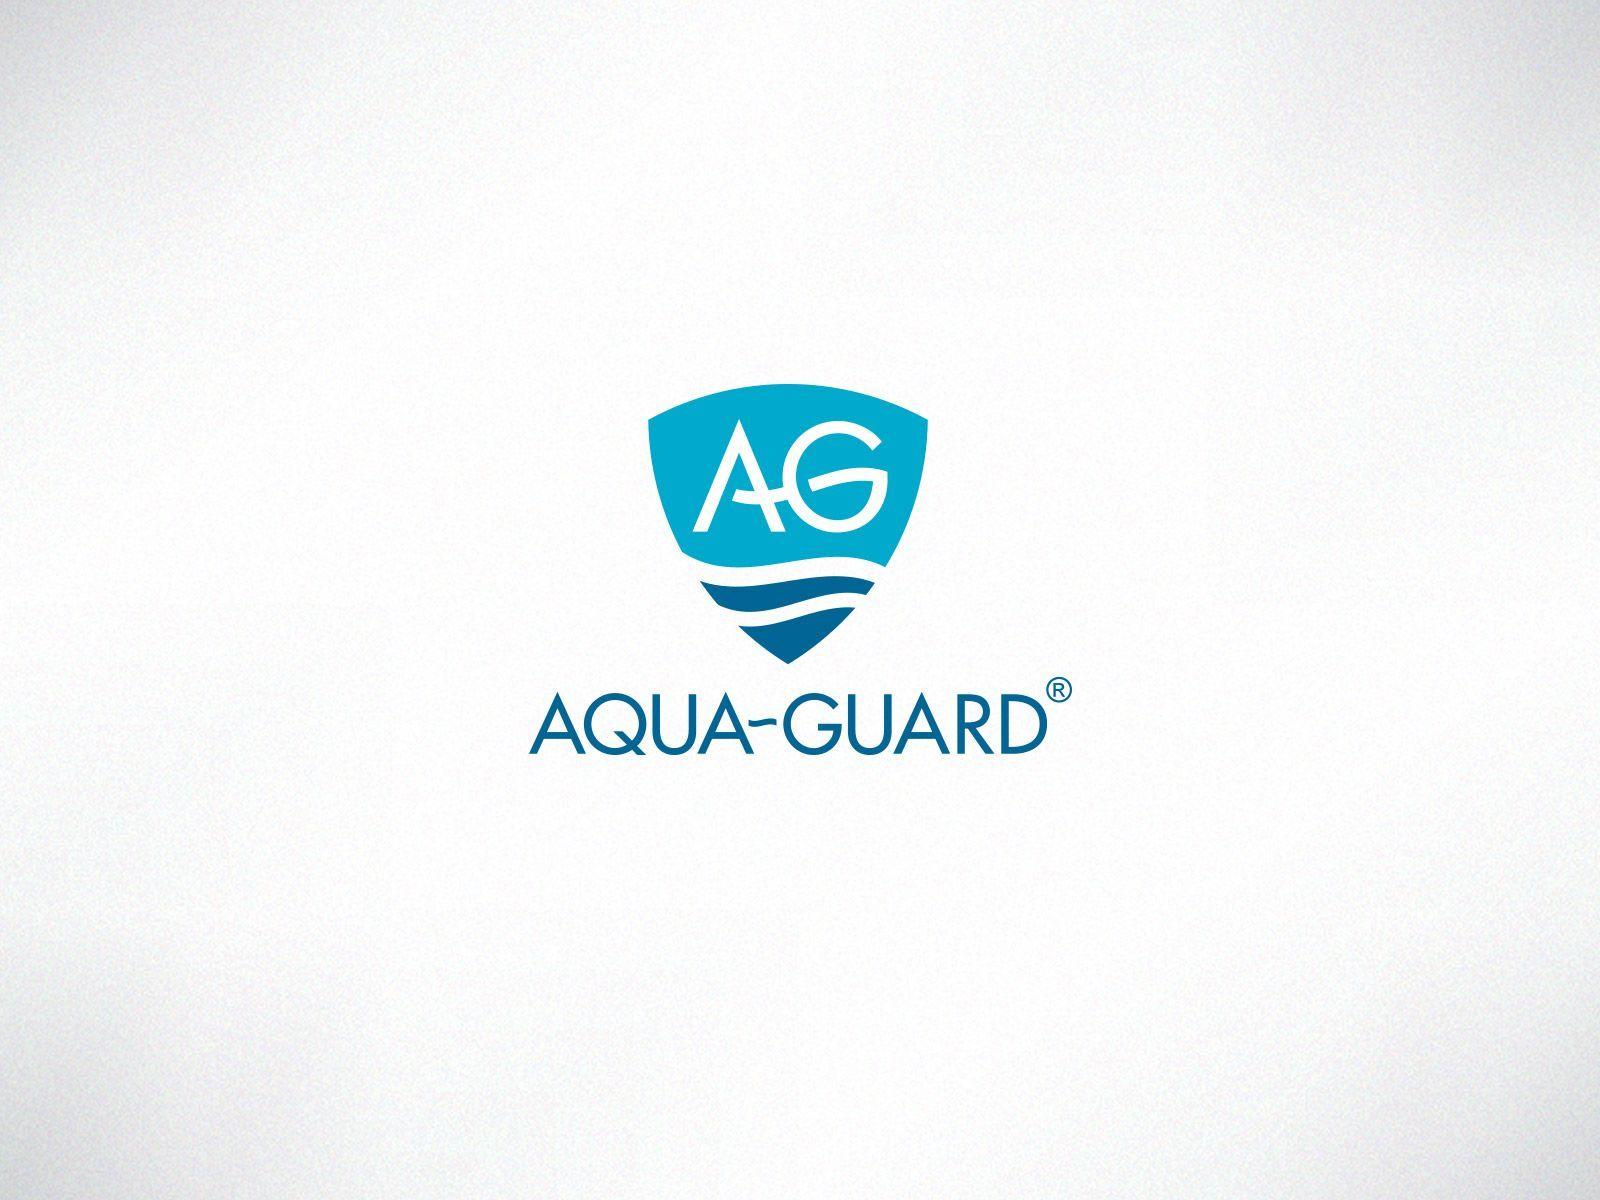 Aquaguard Logo - Aqua-Guard logo design | Logoholik - Logo design | Logos design ...